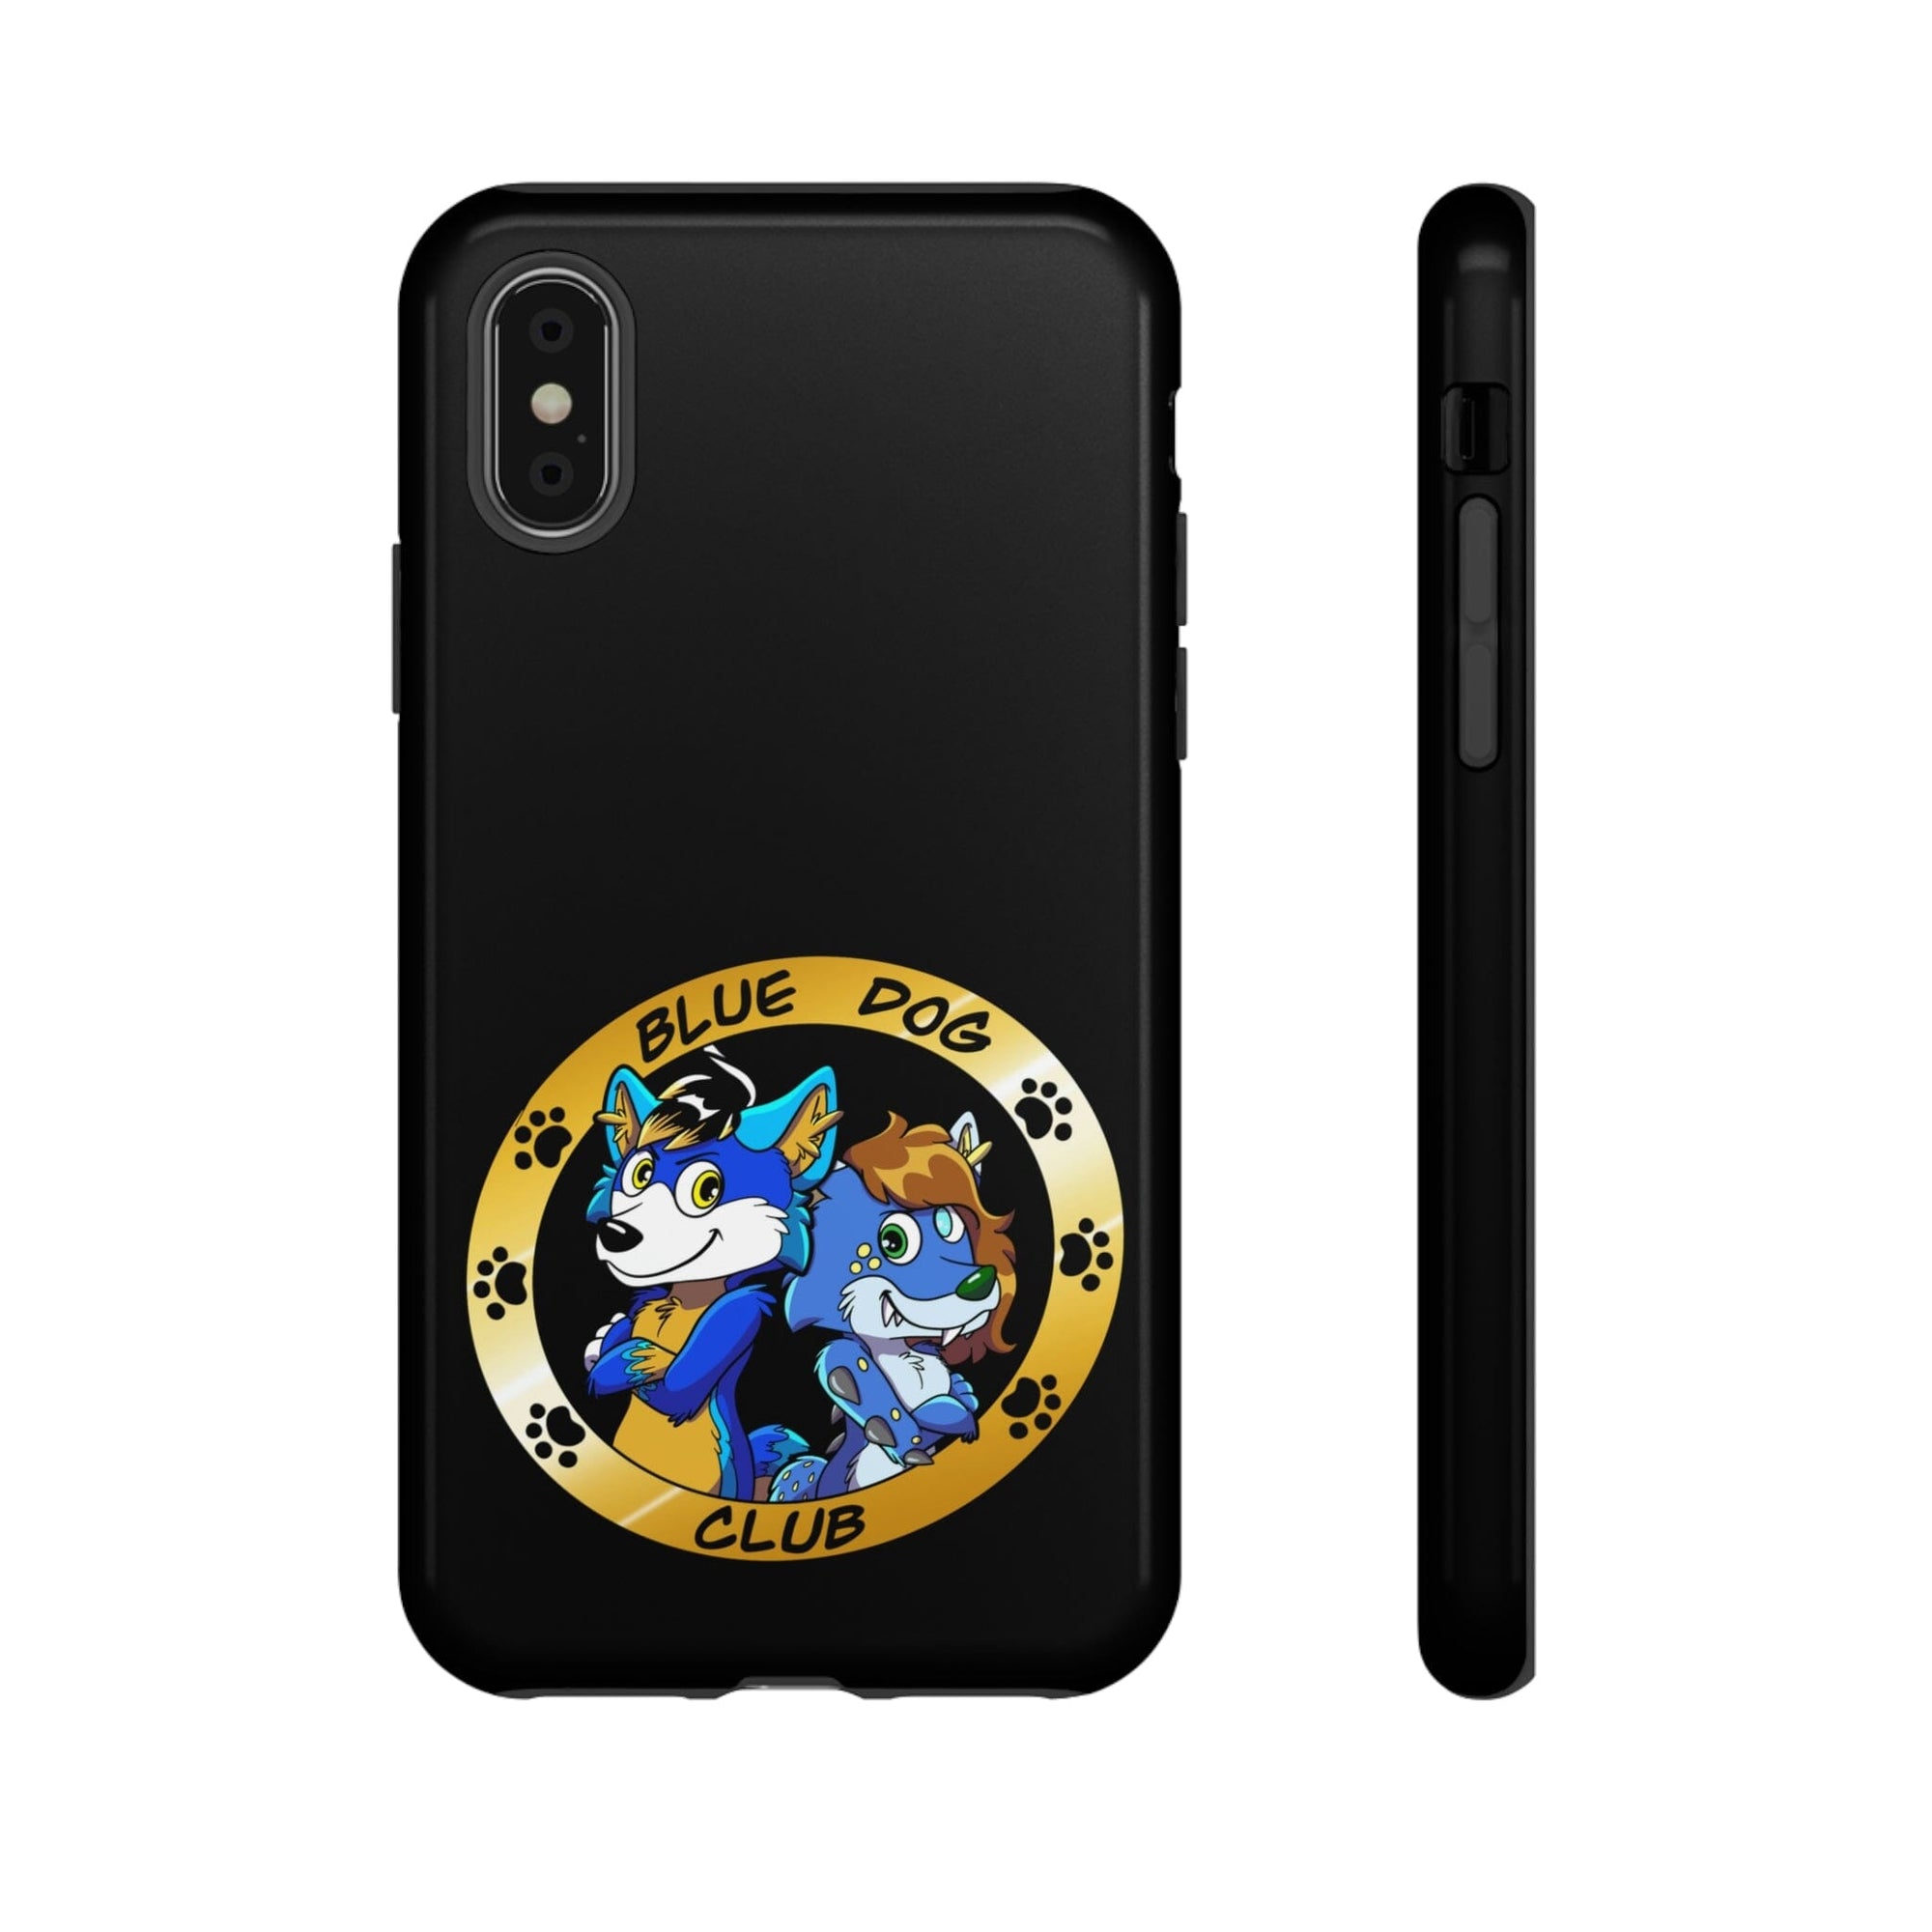 Hund The Hound - Blue Dog Club - Phone Case Phone Case Printify iPhone XS Glossy 